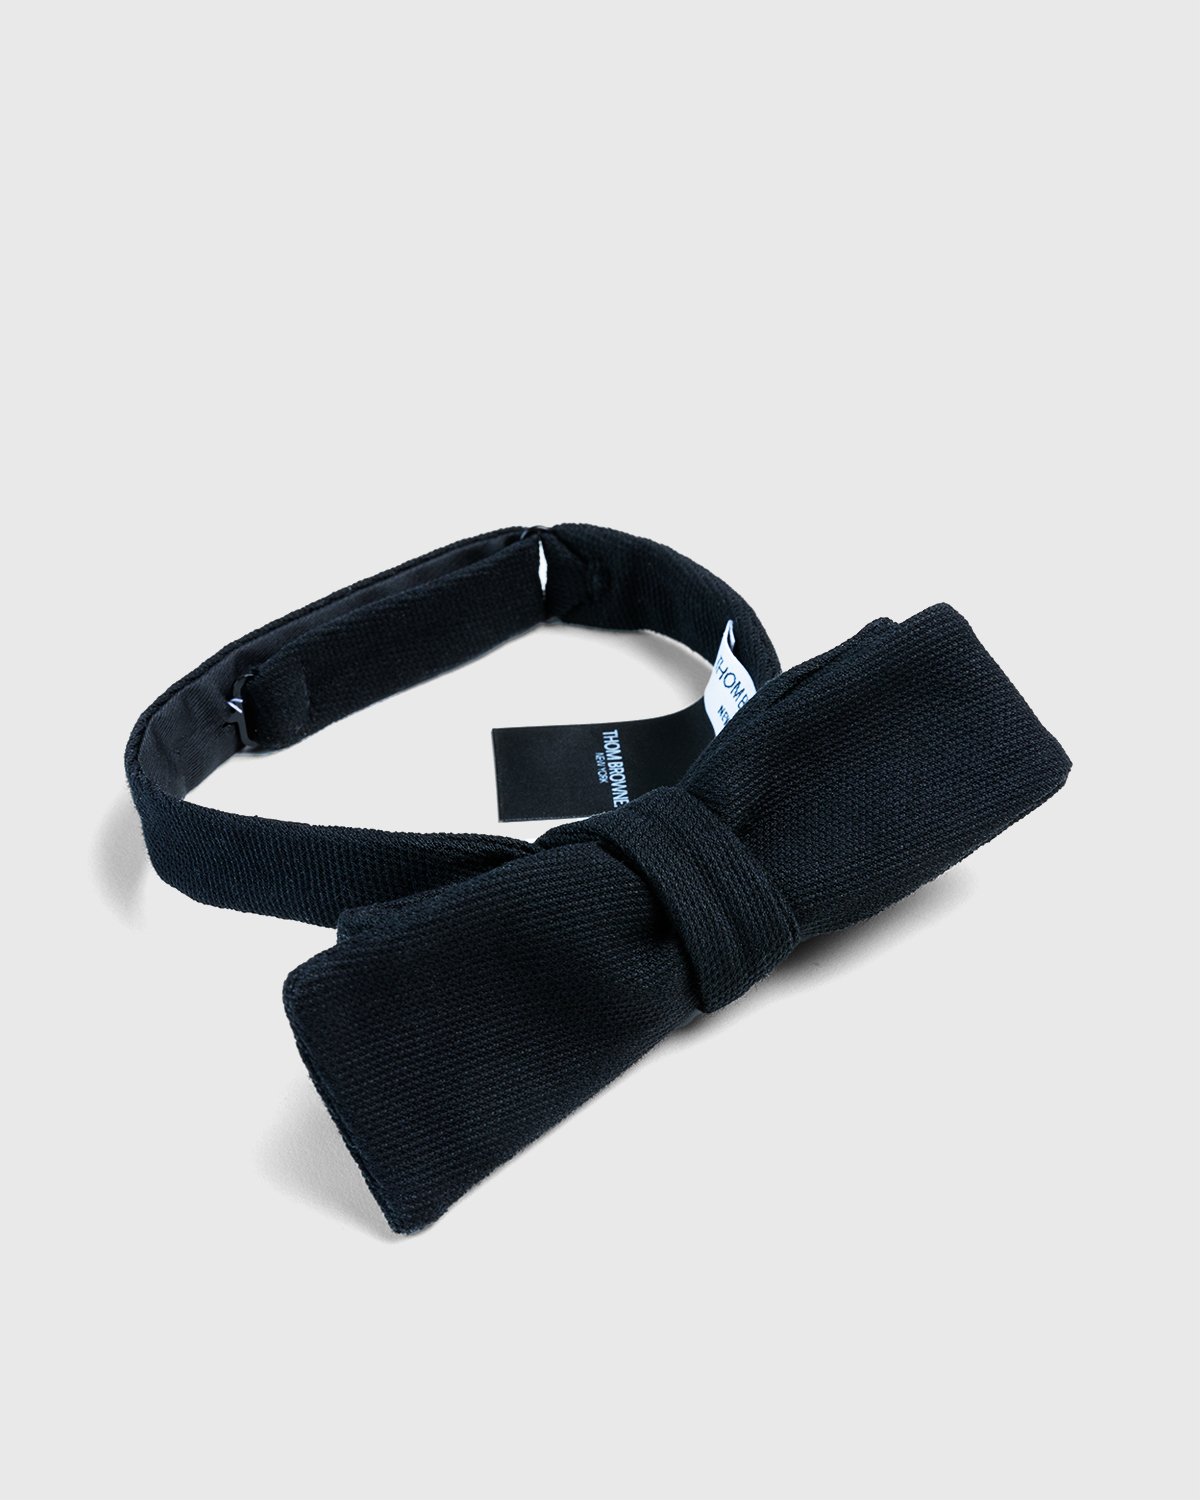 Thom Browne x Highsnobiety - Classic Bow Tie Black - Accessories - Black - Image 1